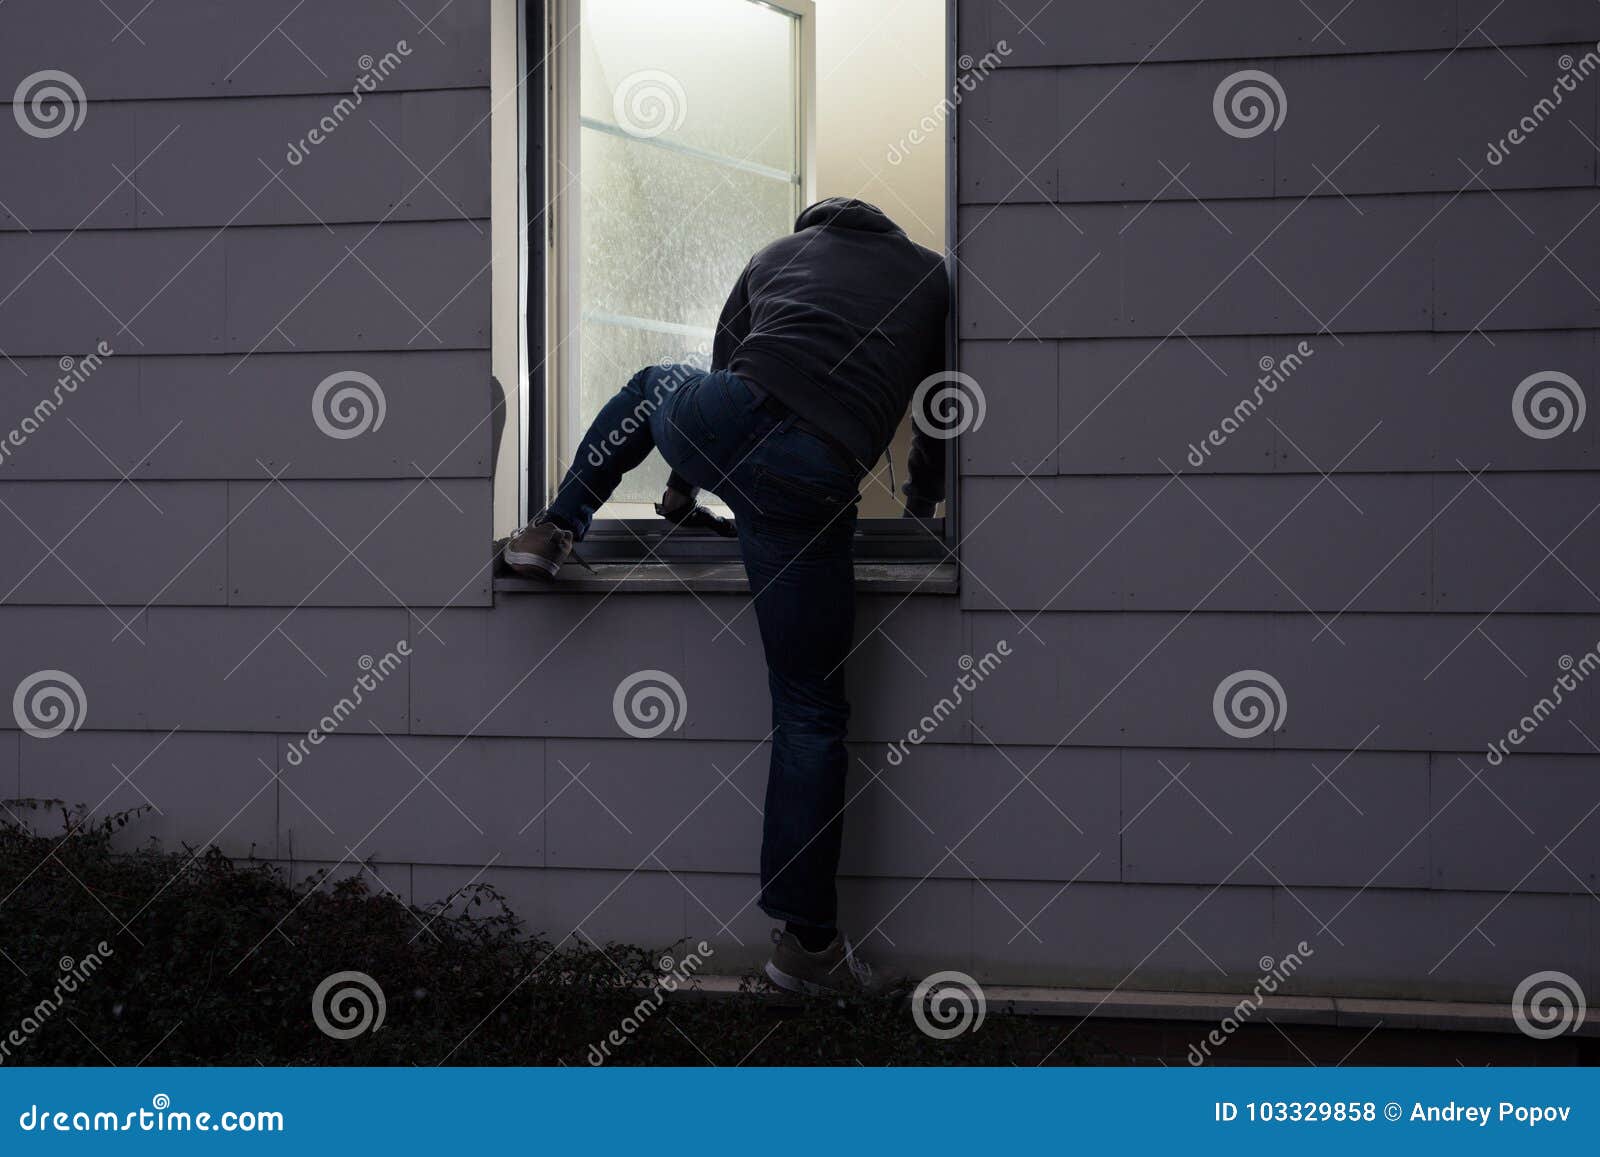 burglar entering house through window